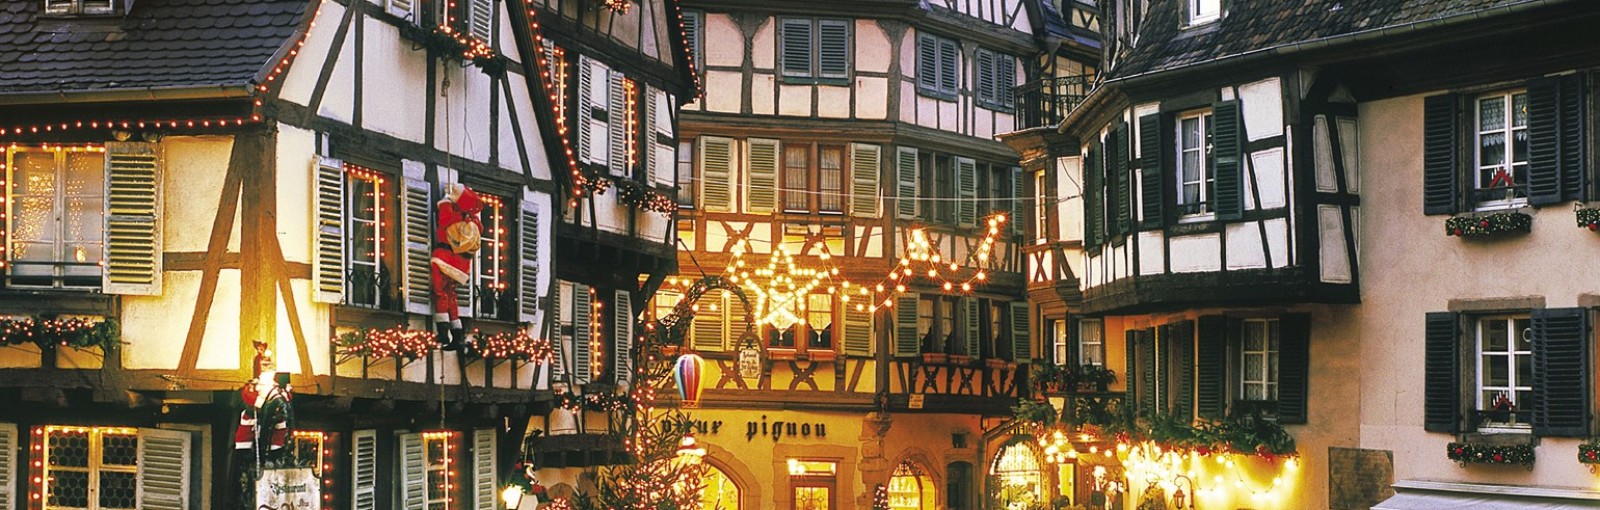 Tours Overnight tour in Alsace - Alsace - Regional tours